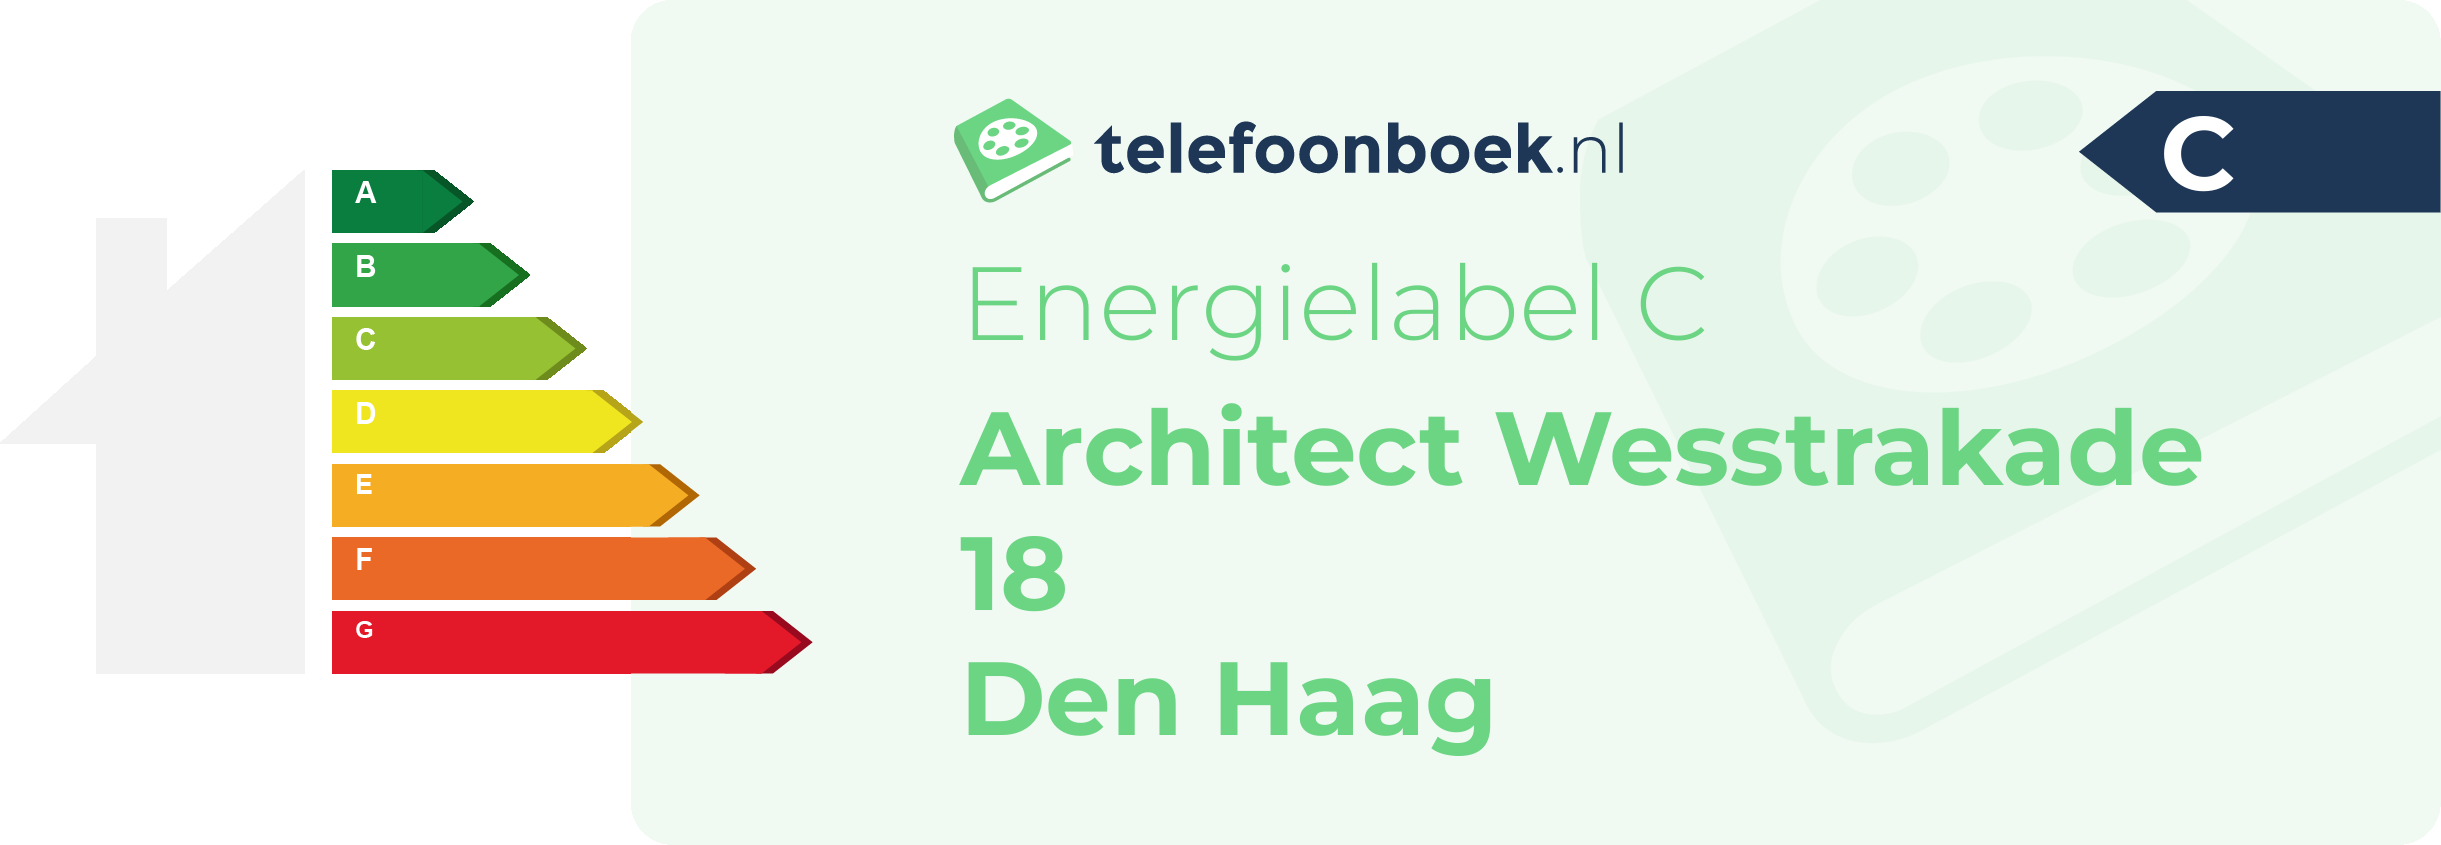 Energielabel Architect Wesstrakade 18 Den Haag